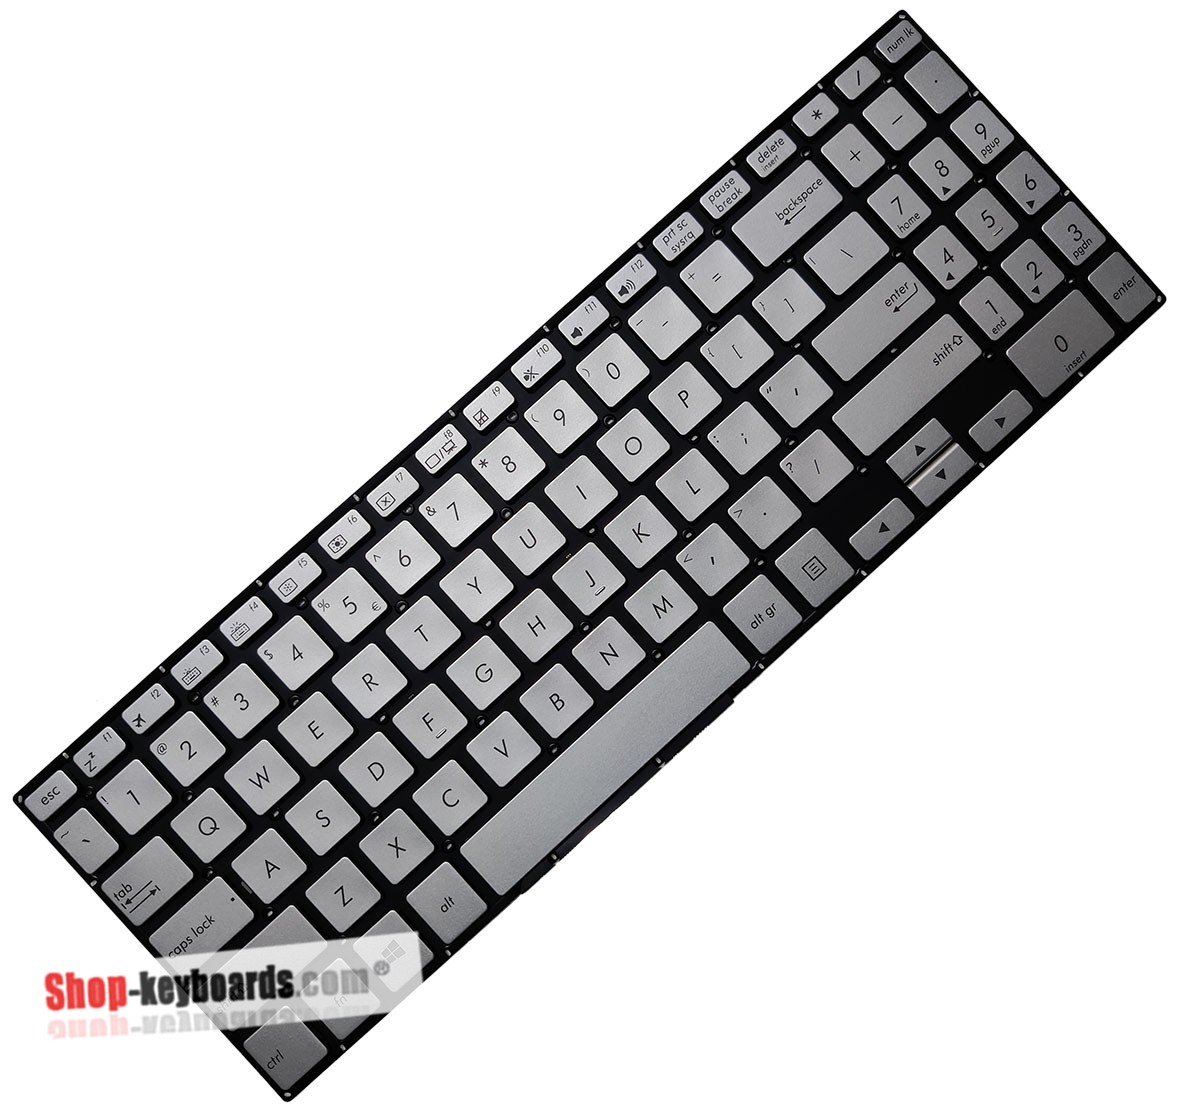 Asus 0KNB0-5632UI00 Keyboard replacement